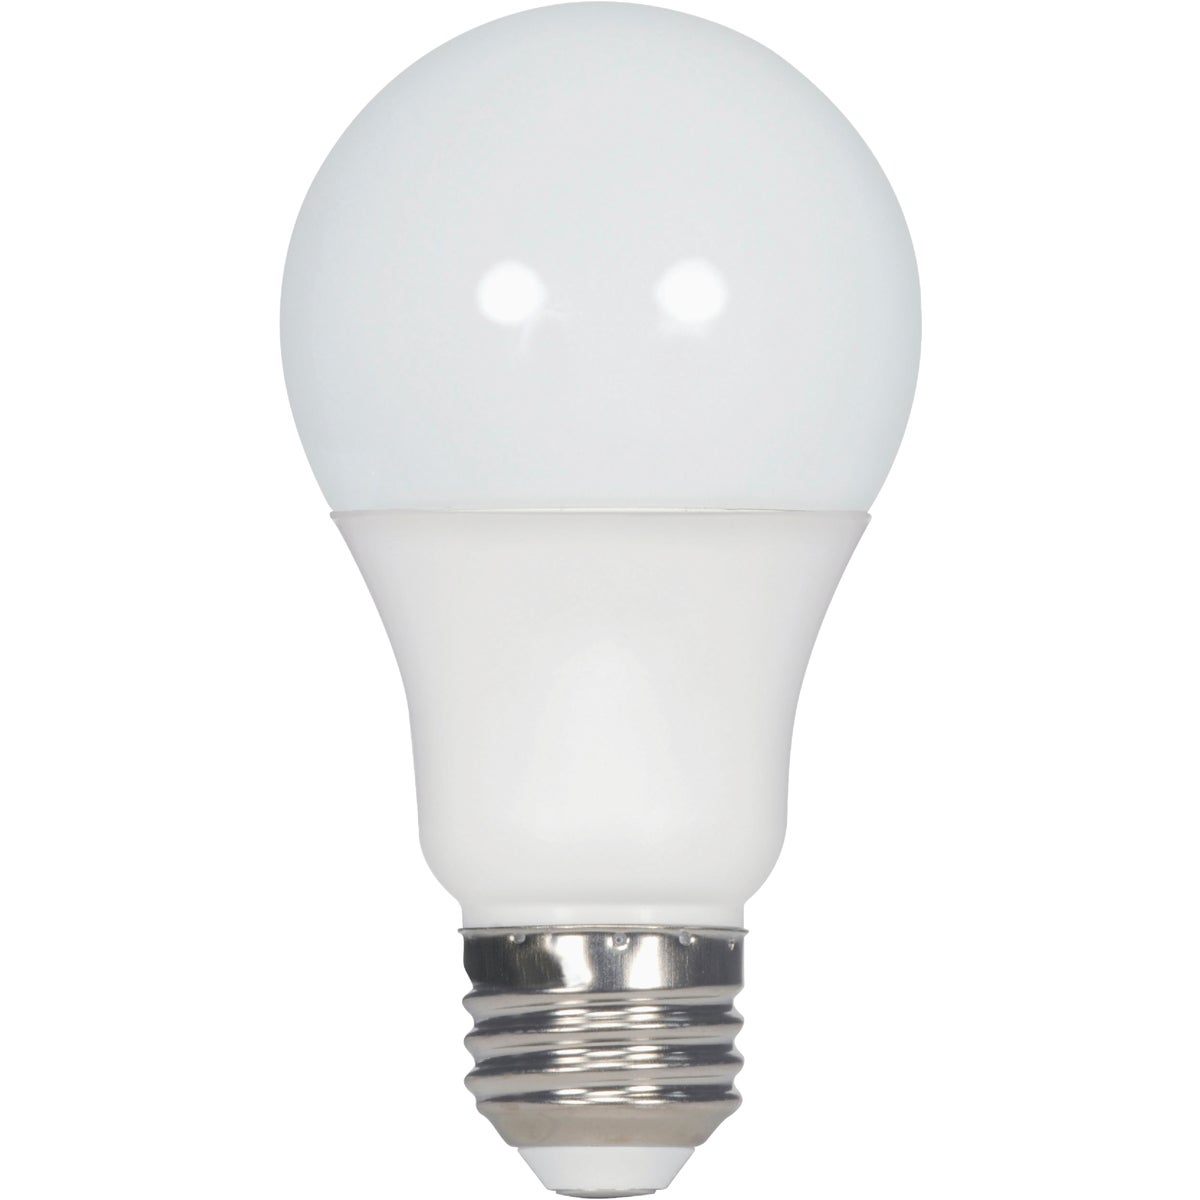 Satco 60W Equivalent Warm White A19 Medium LED Light Bulb (4-Pack)